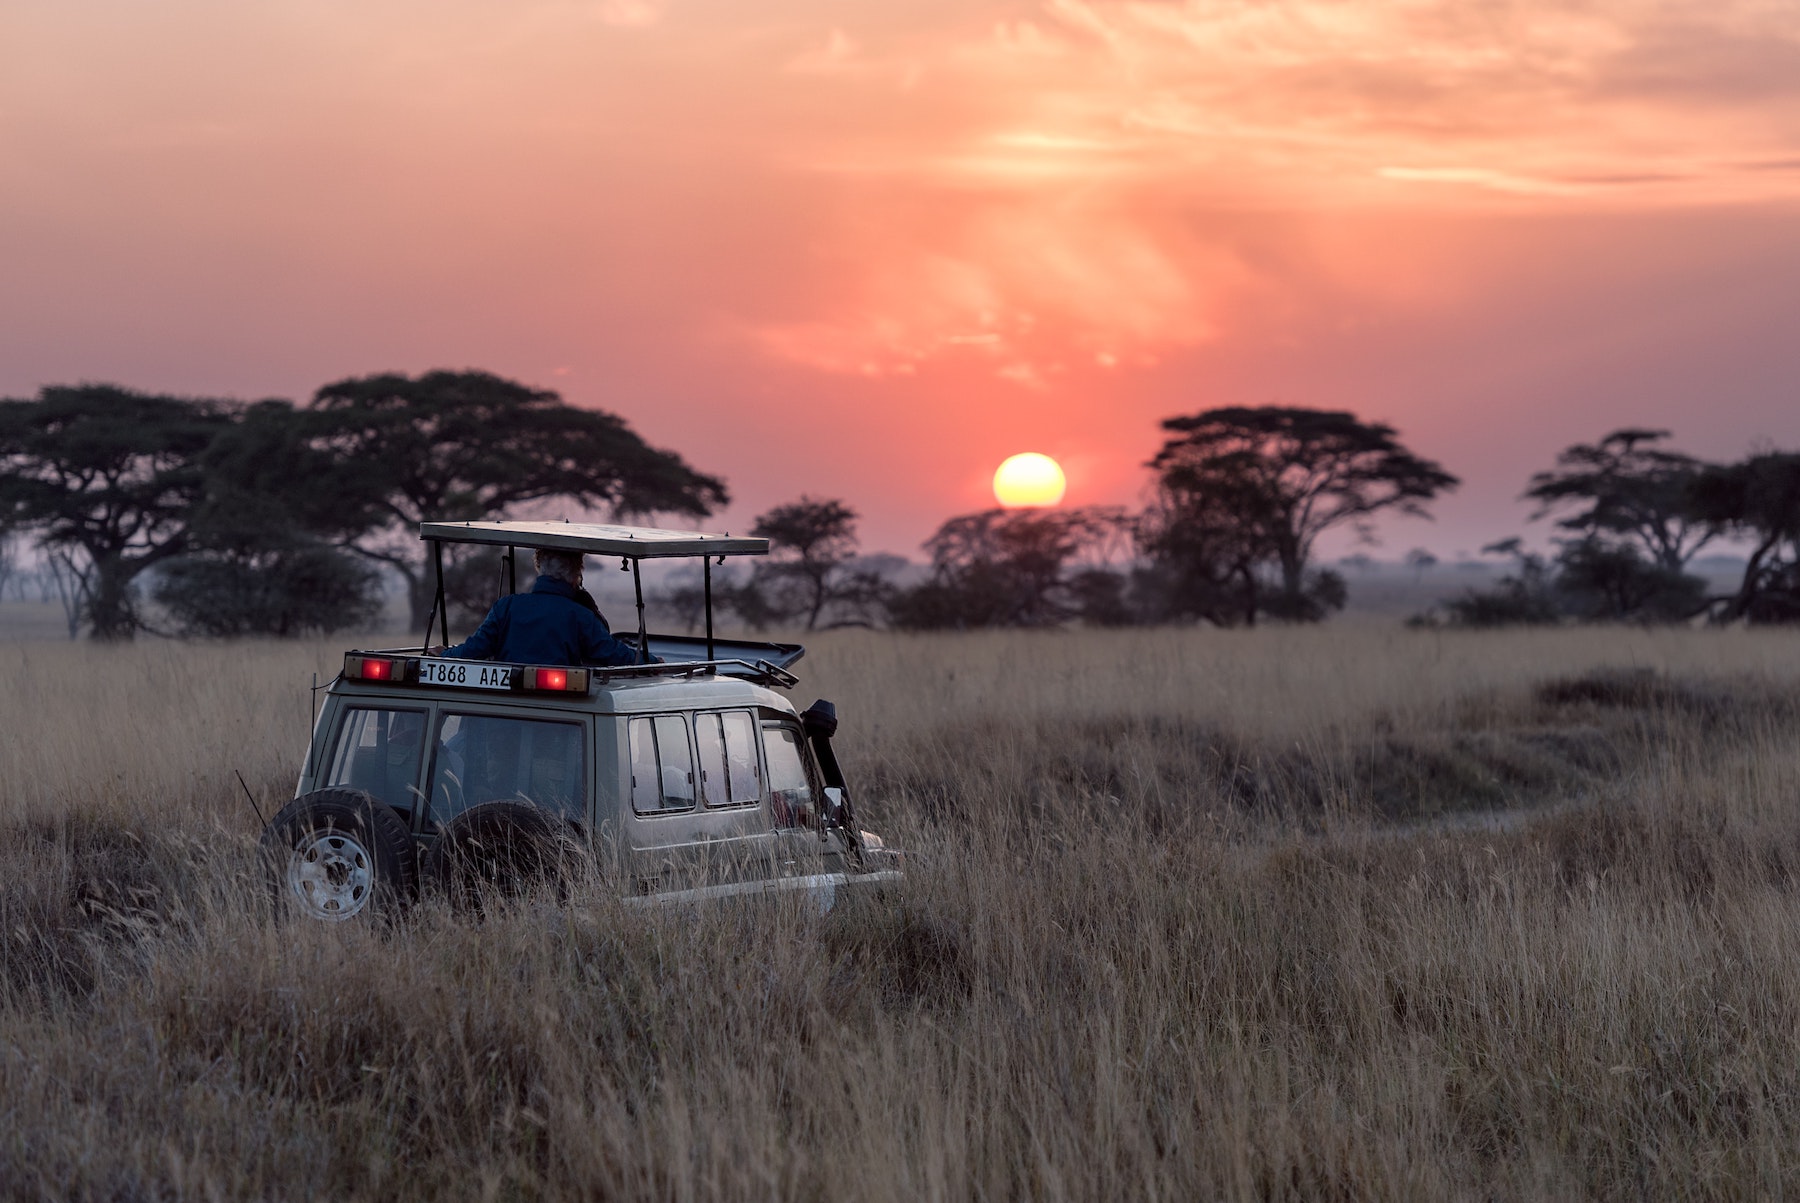 A jeep makes its way through the savannah on an African safari as the sun sets.